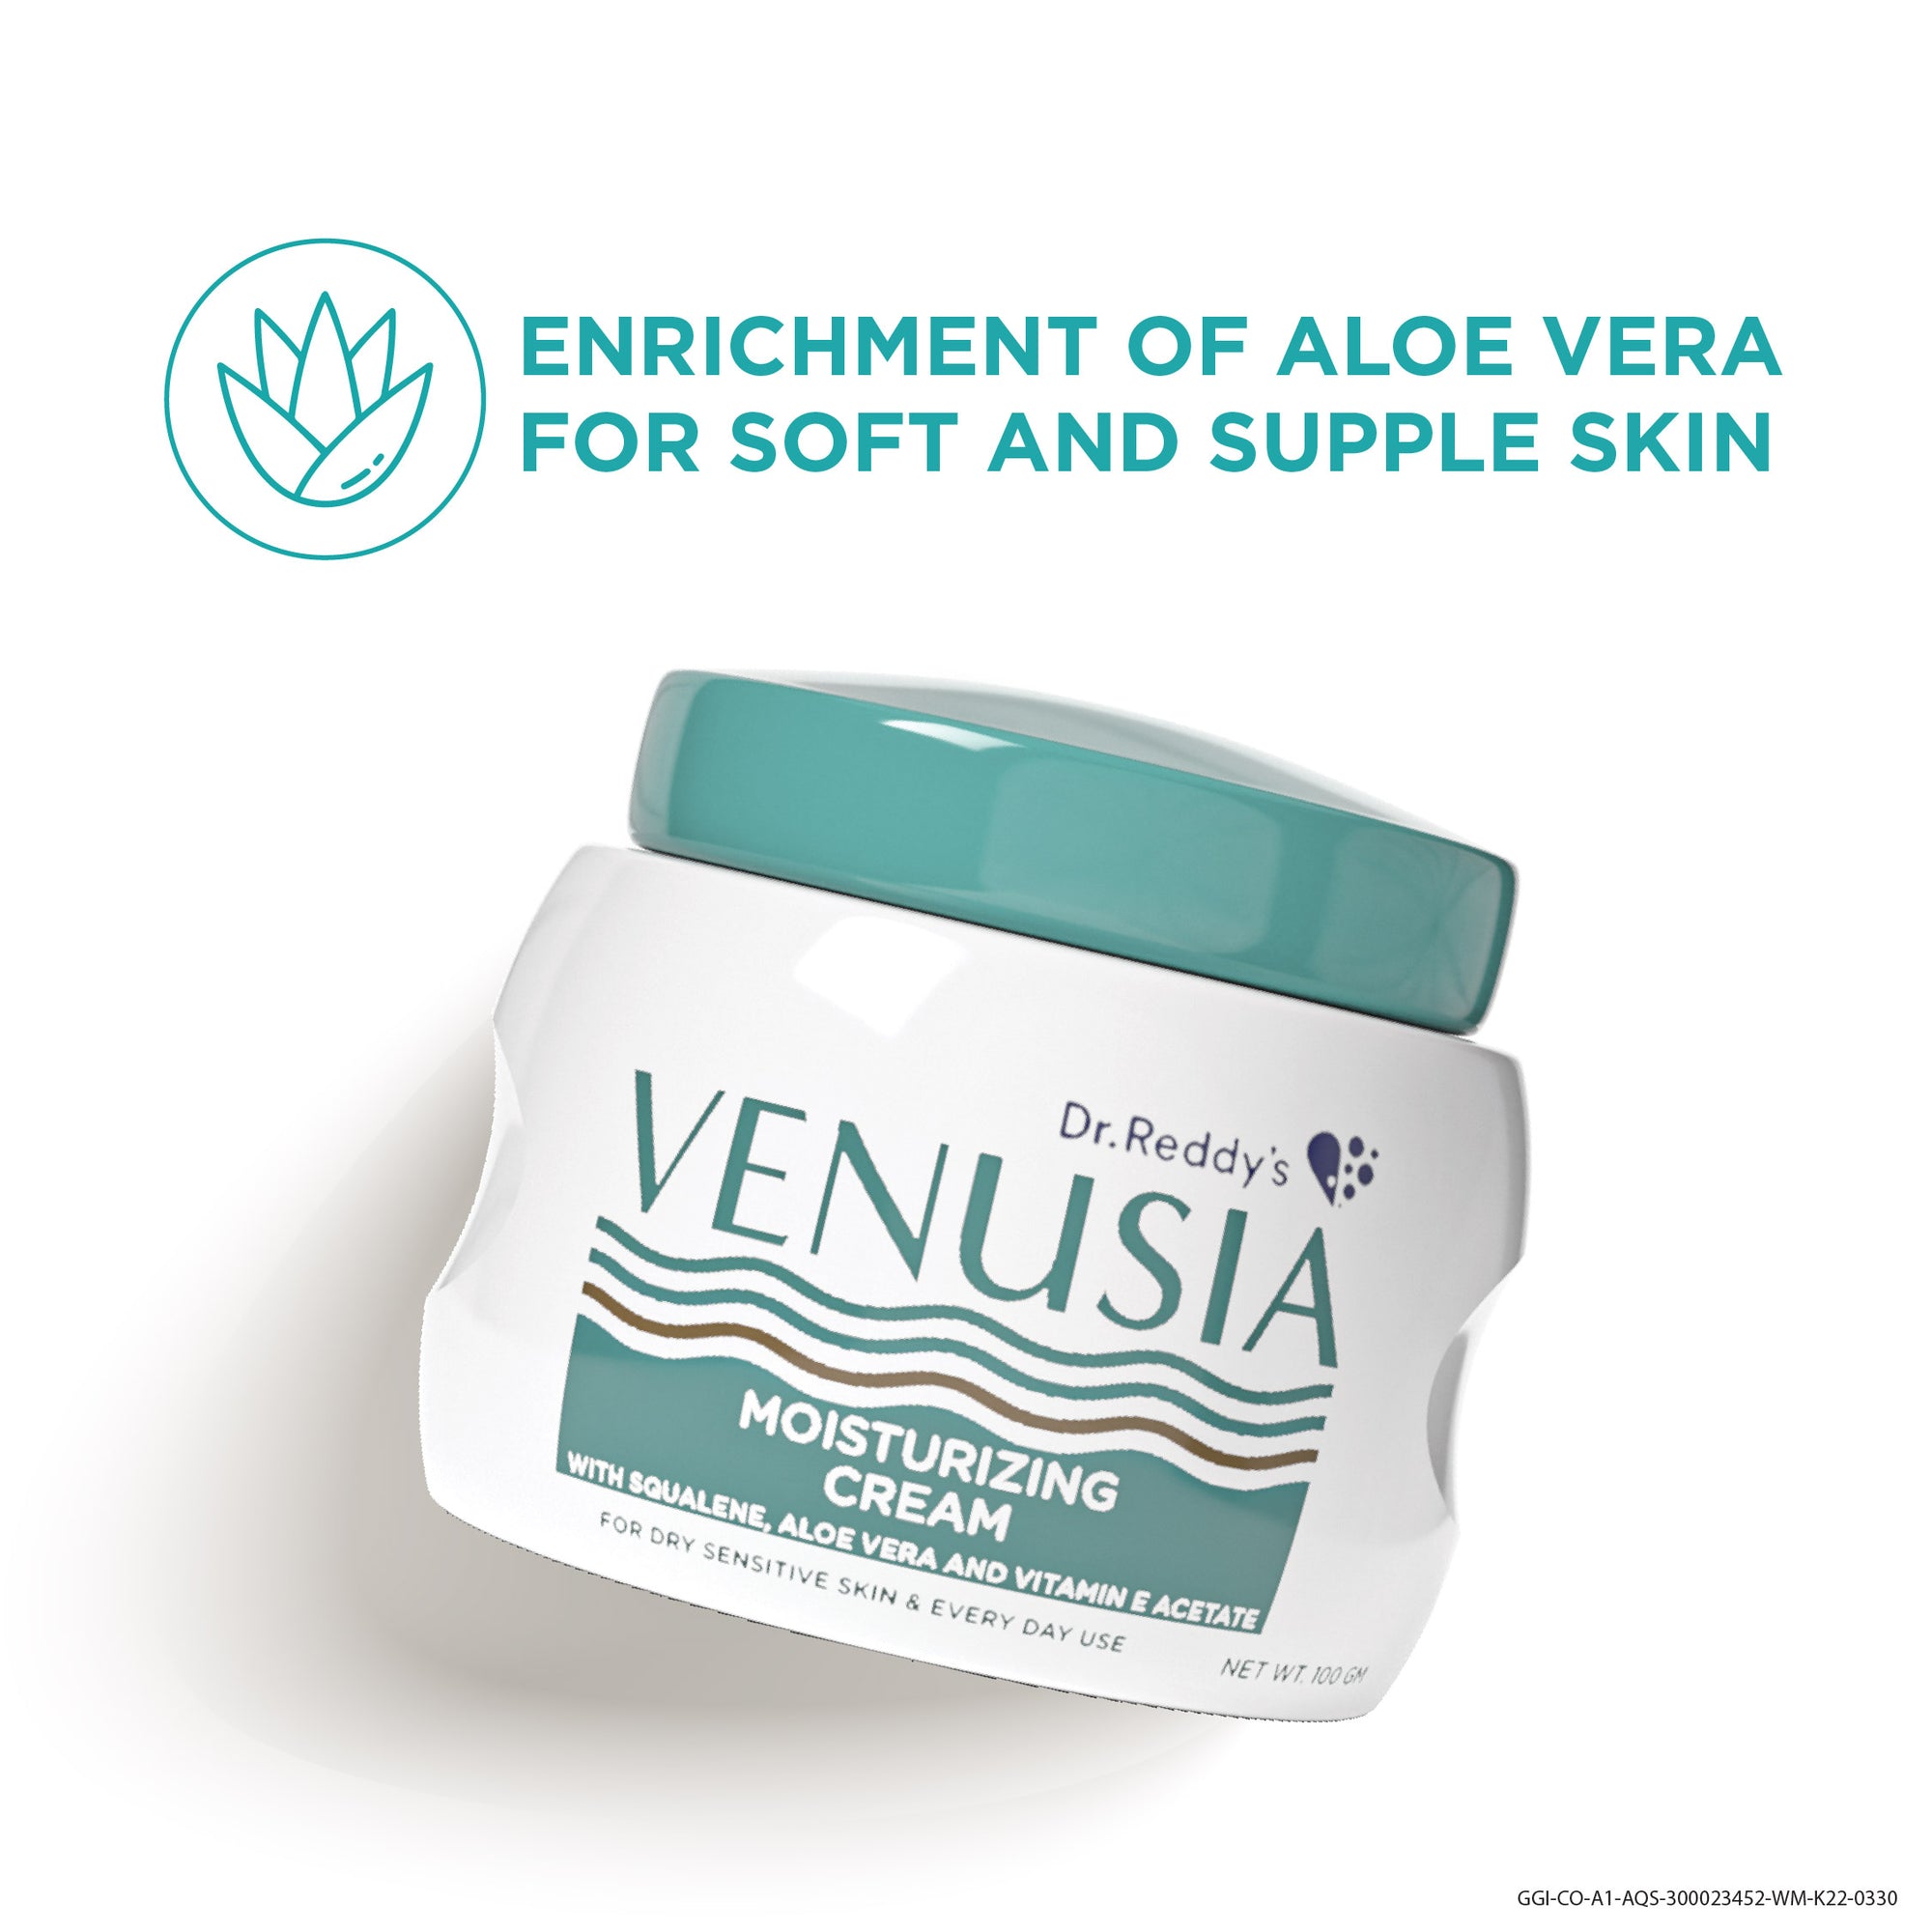 Dr. Reddy's Venusia Moisturizing Cream With Aloe Vera,Vitamin E & Squalene,Smooth & Moisturized Skin,100 GM